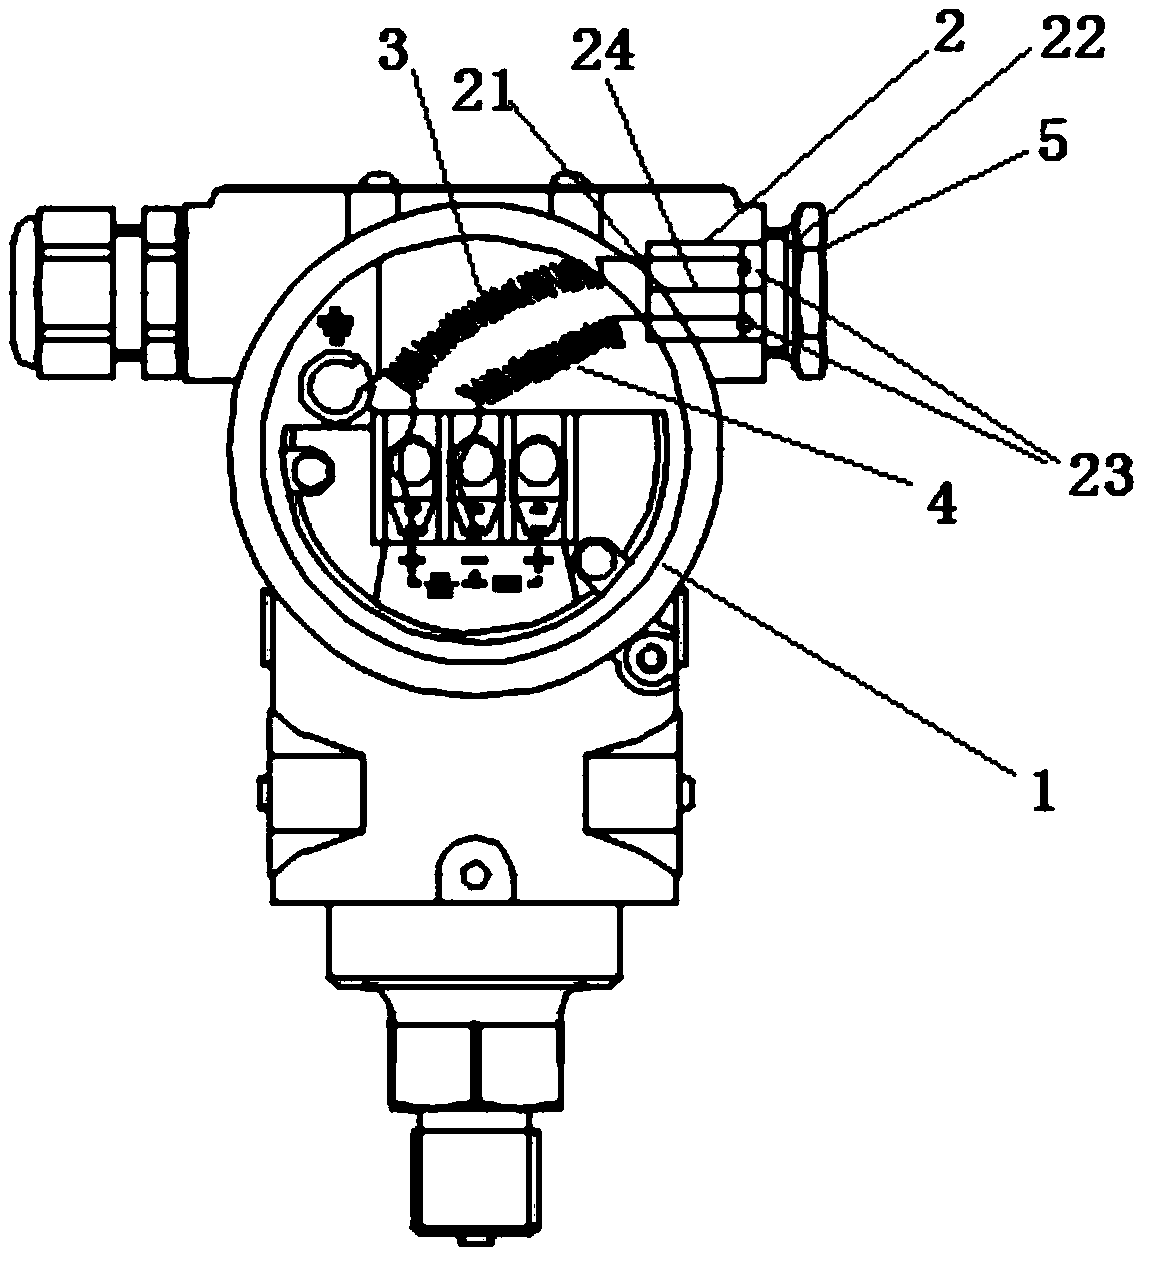 Pressure transmitter device